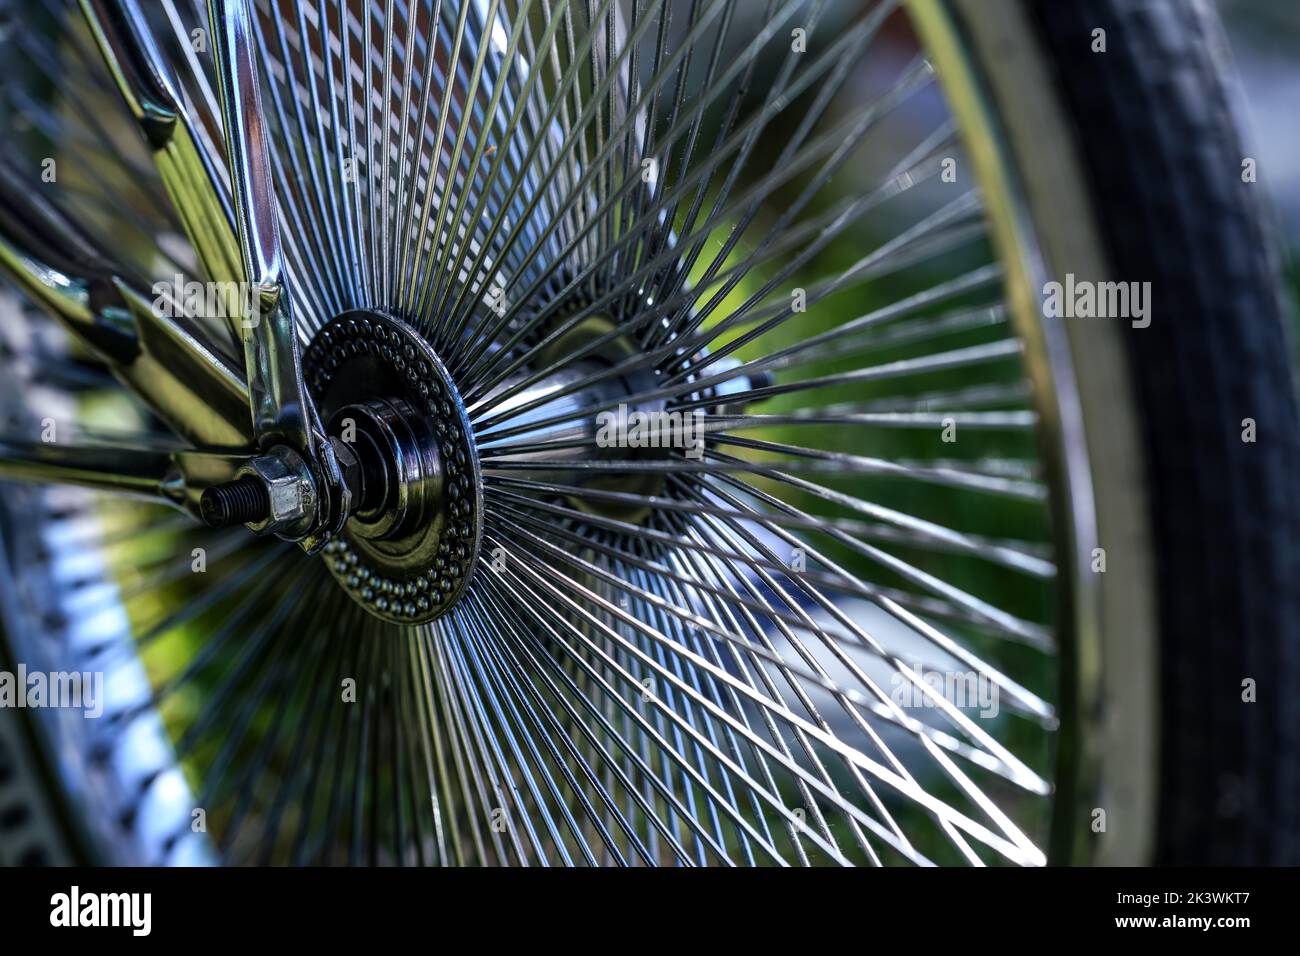 Shiny chrome bicycle spokes on a stylish wheel, closeup detail Stock Photo